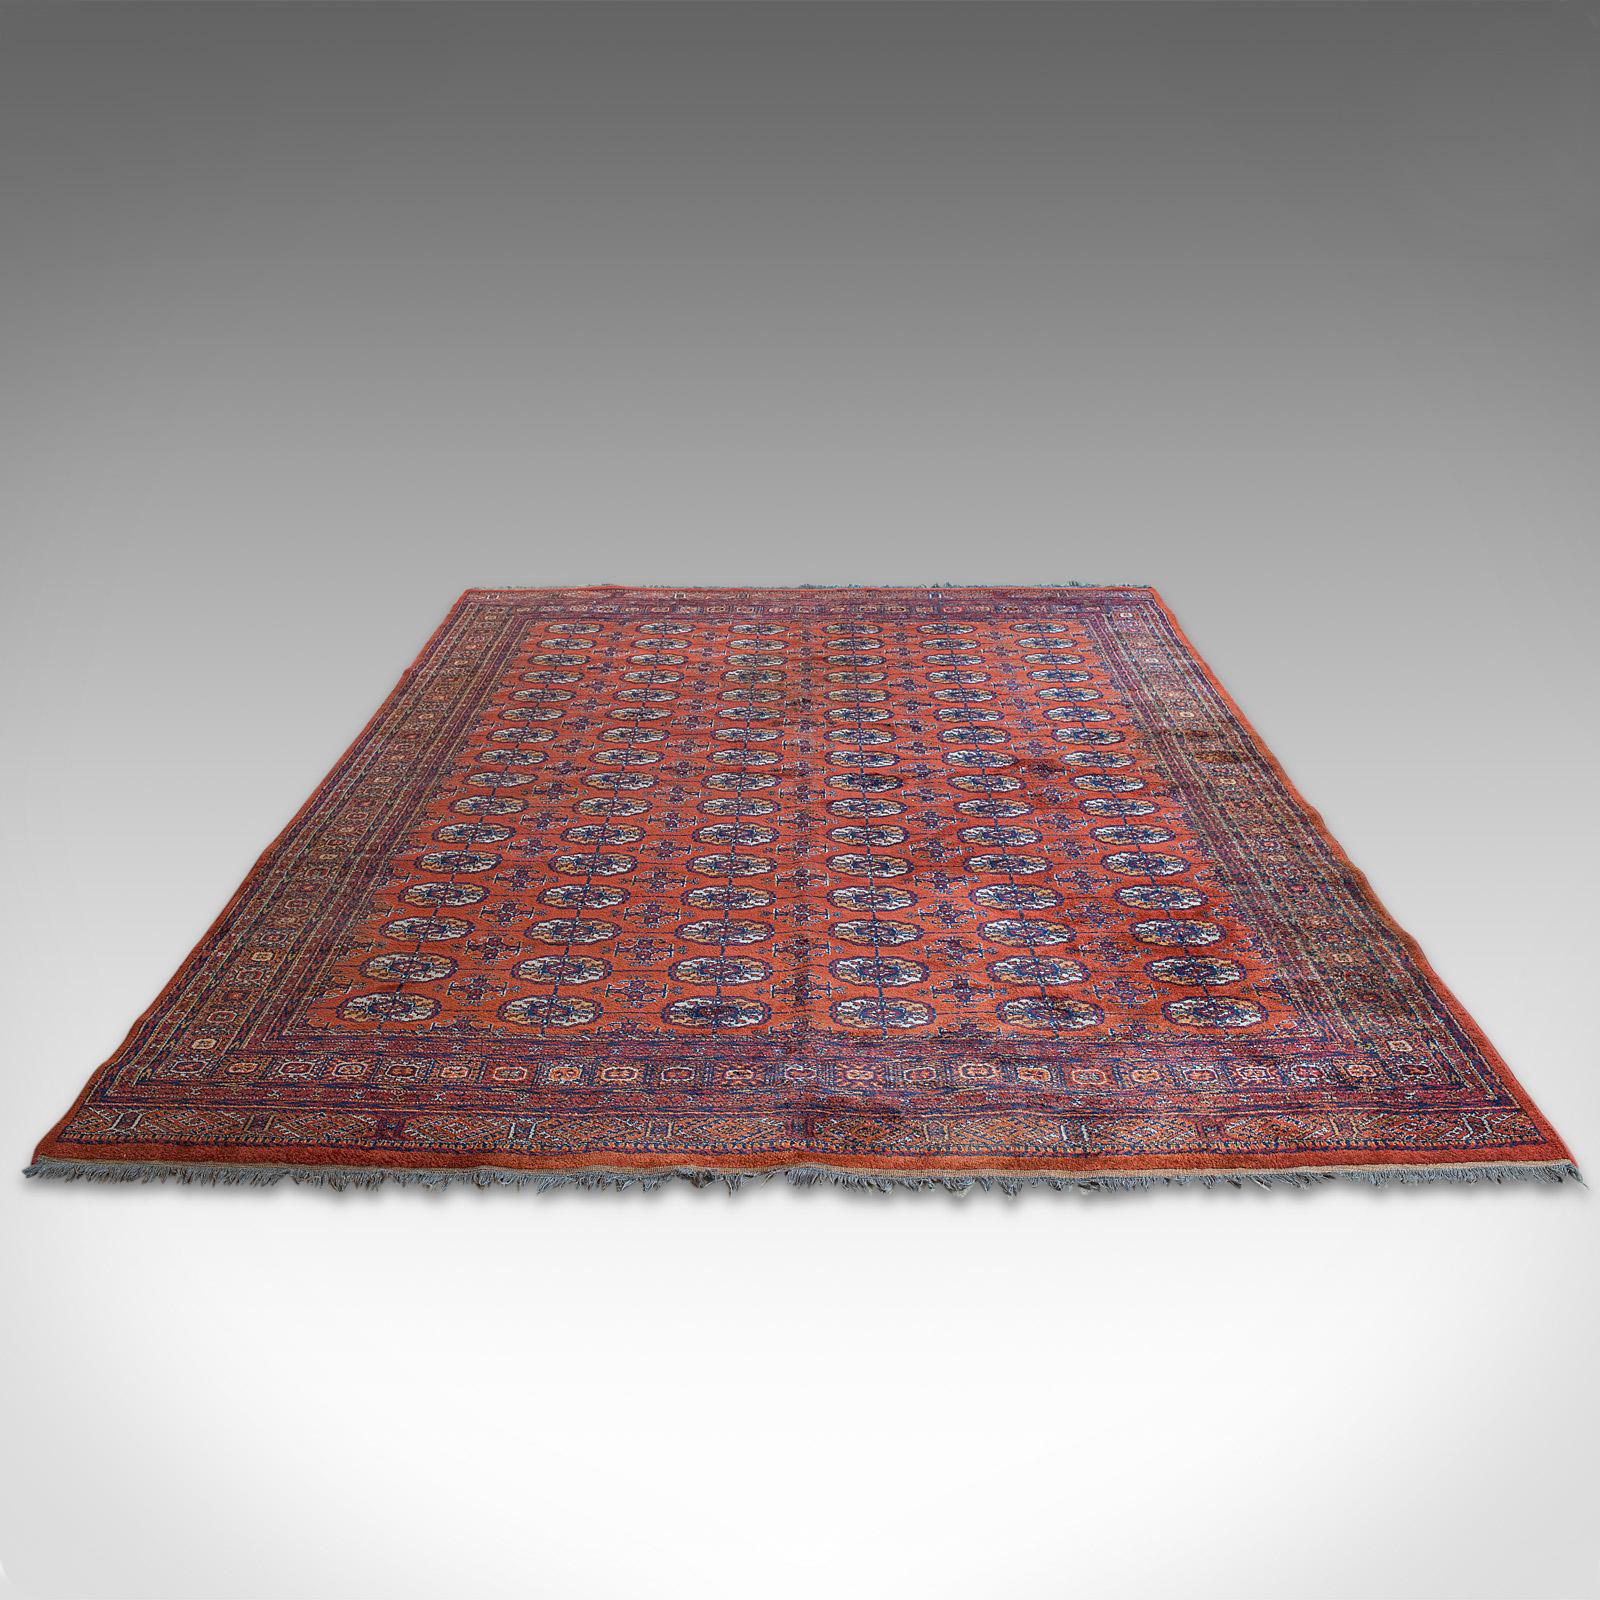 Wool Large Vintage Bokhara Carpet, Middle Eastern, Hall, Living Room, Rug, circa 1970